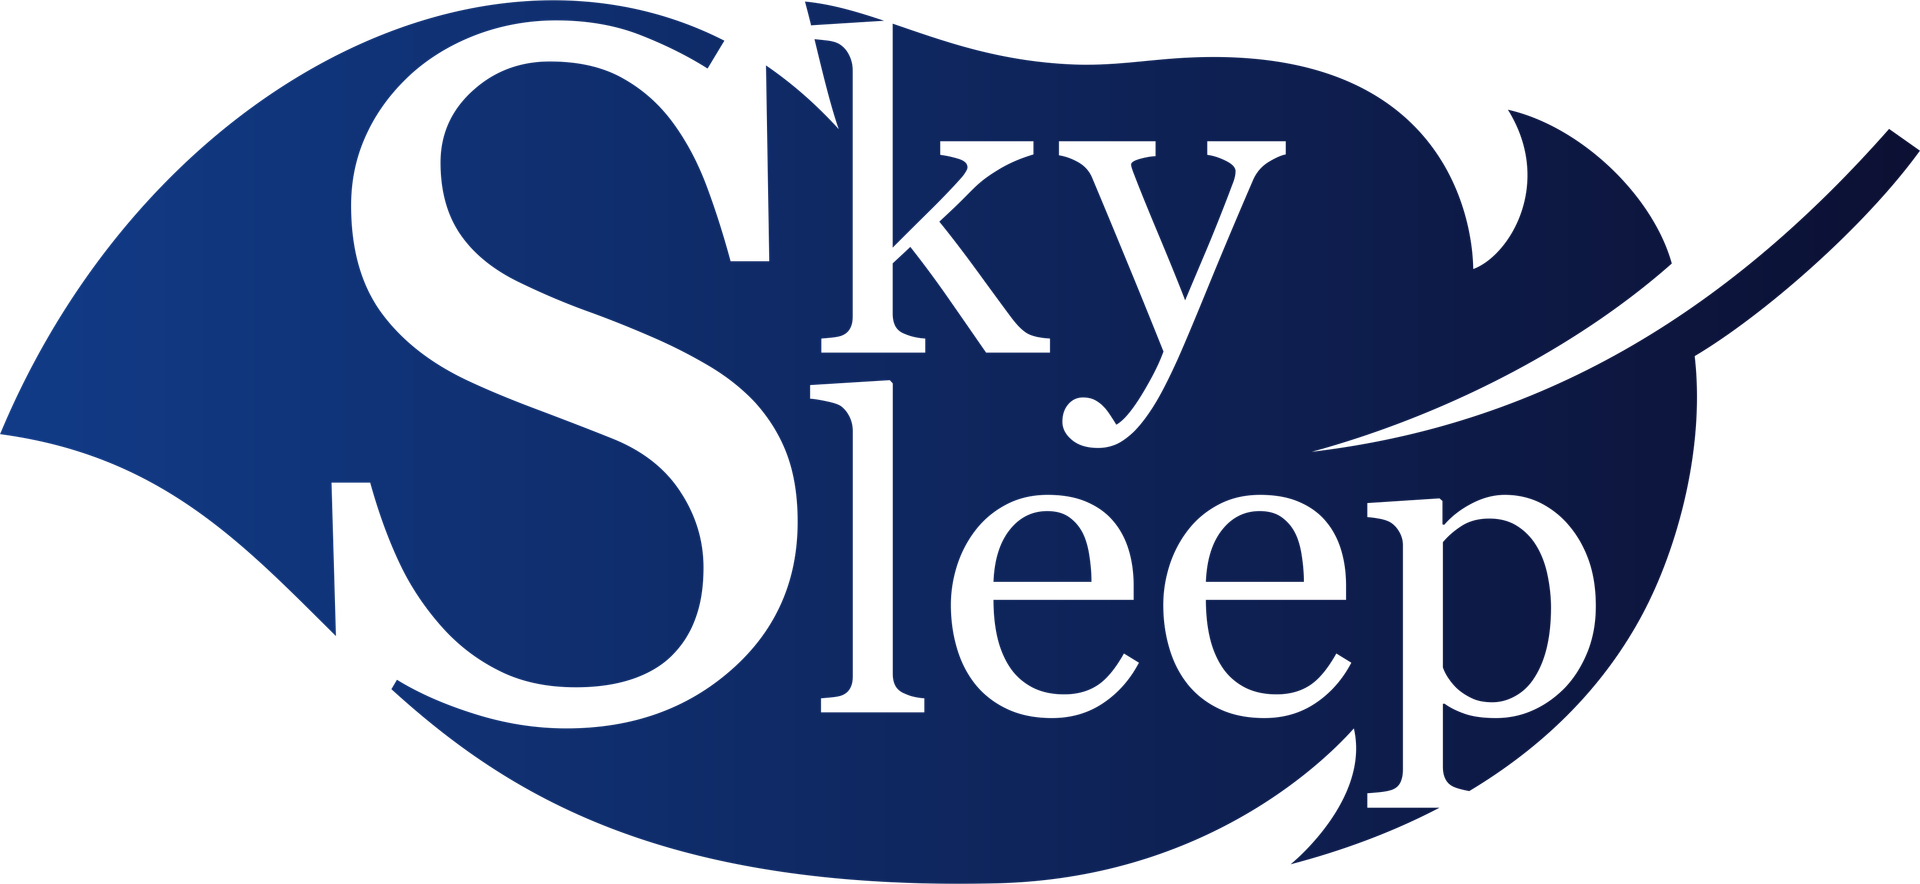 Skysleep